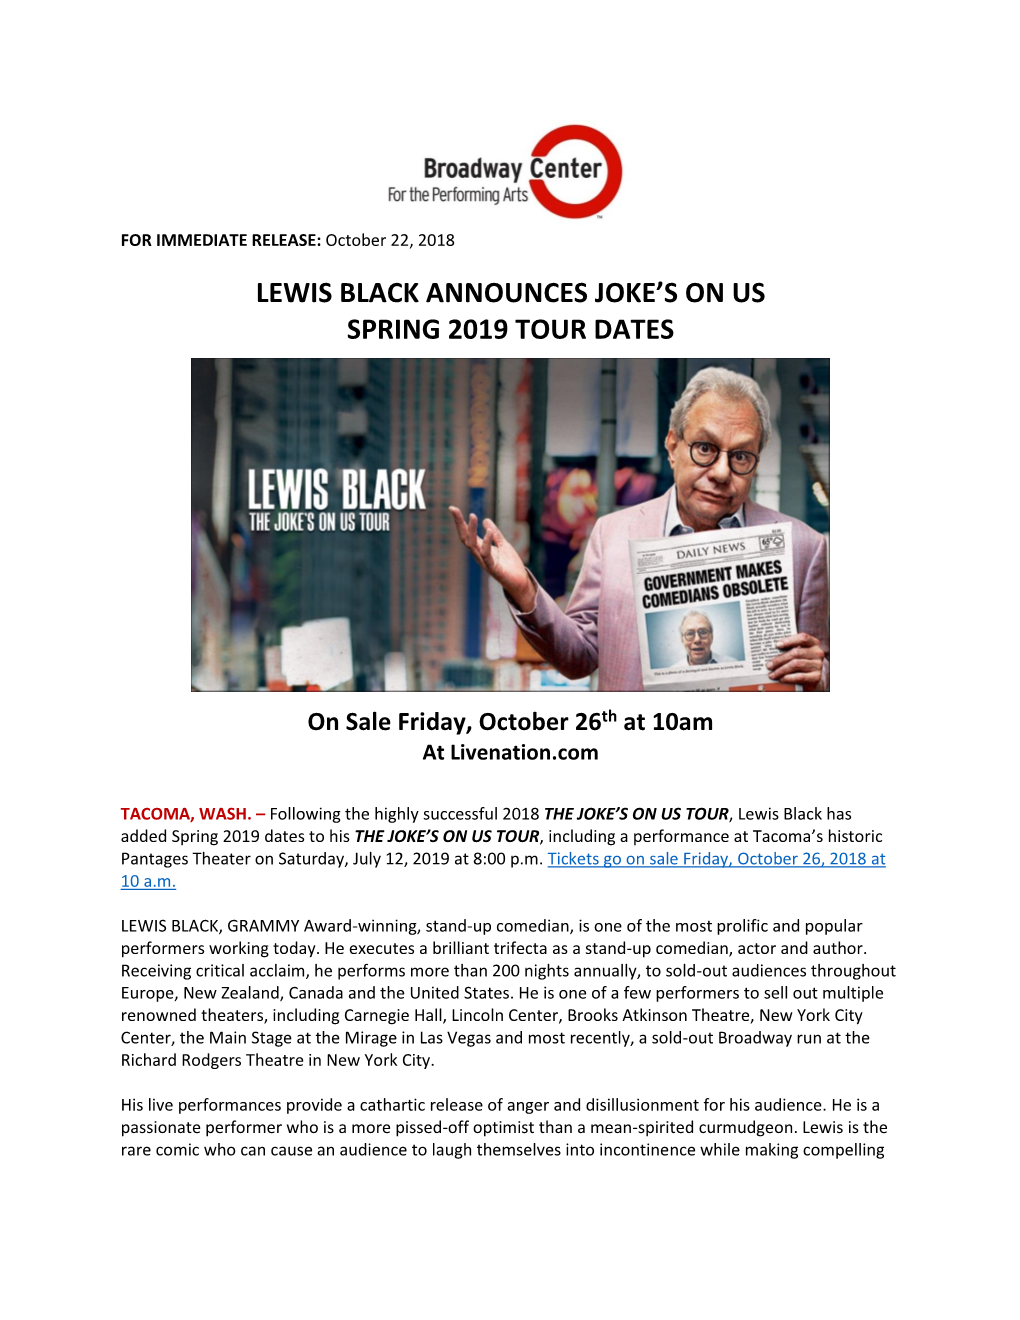 Lewis Black Announces Joke's on Us Spring 2019 Tour Dates